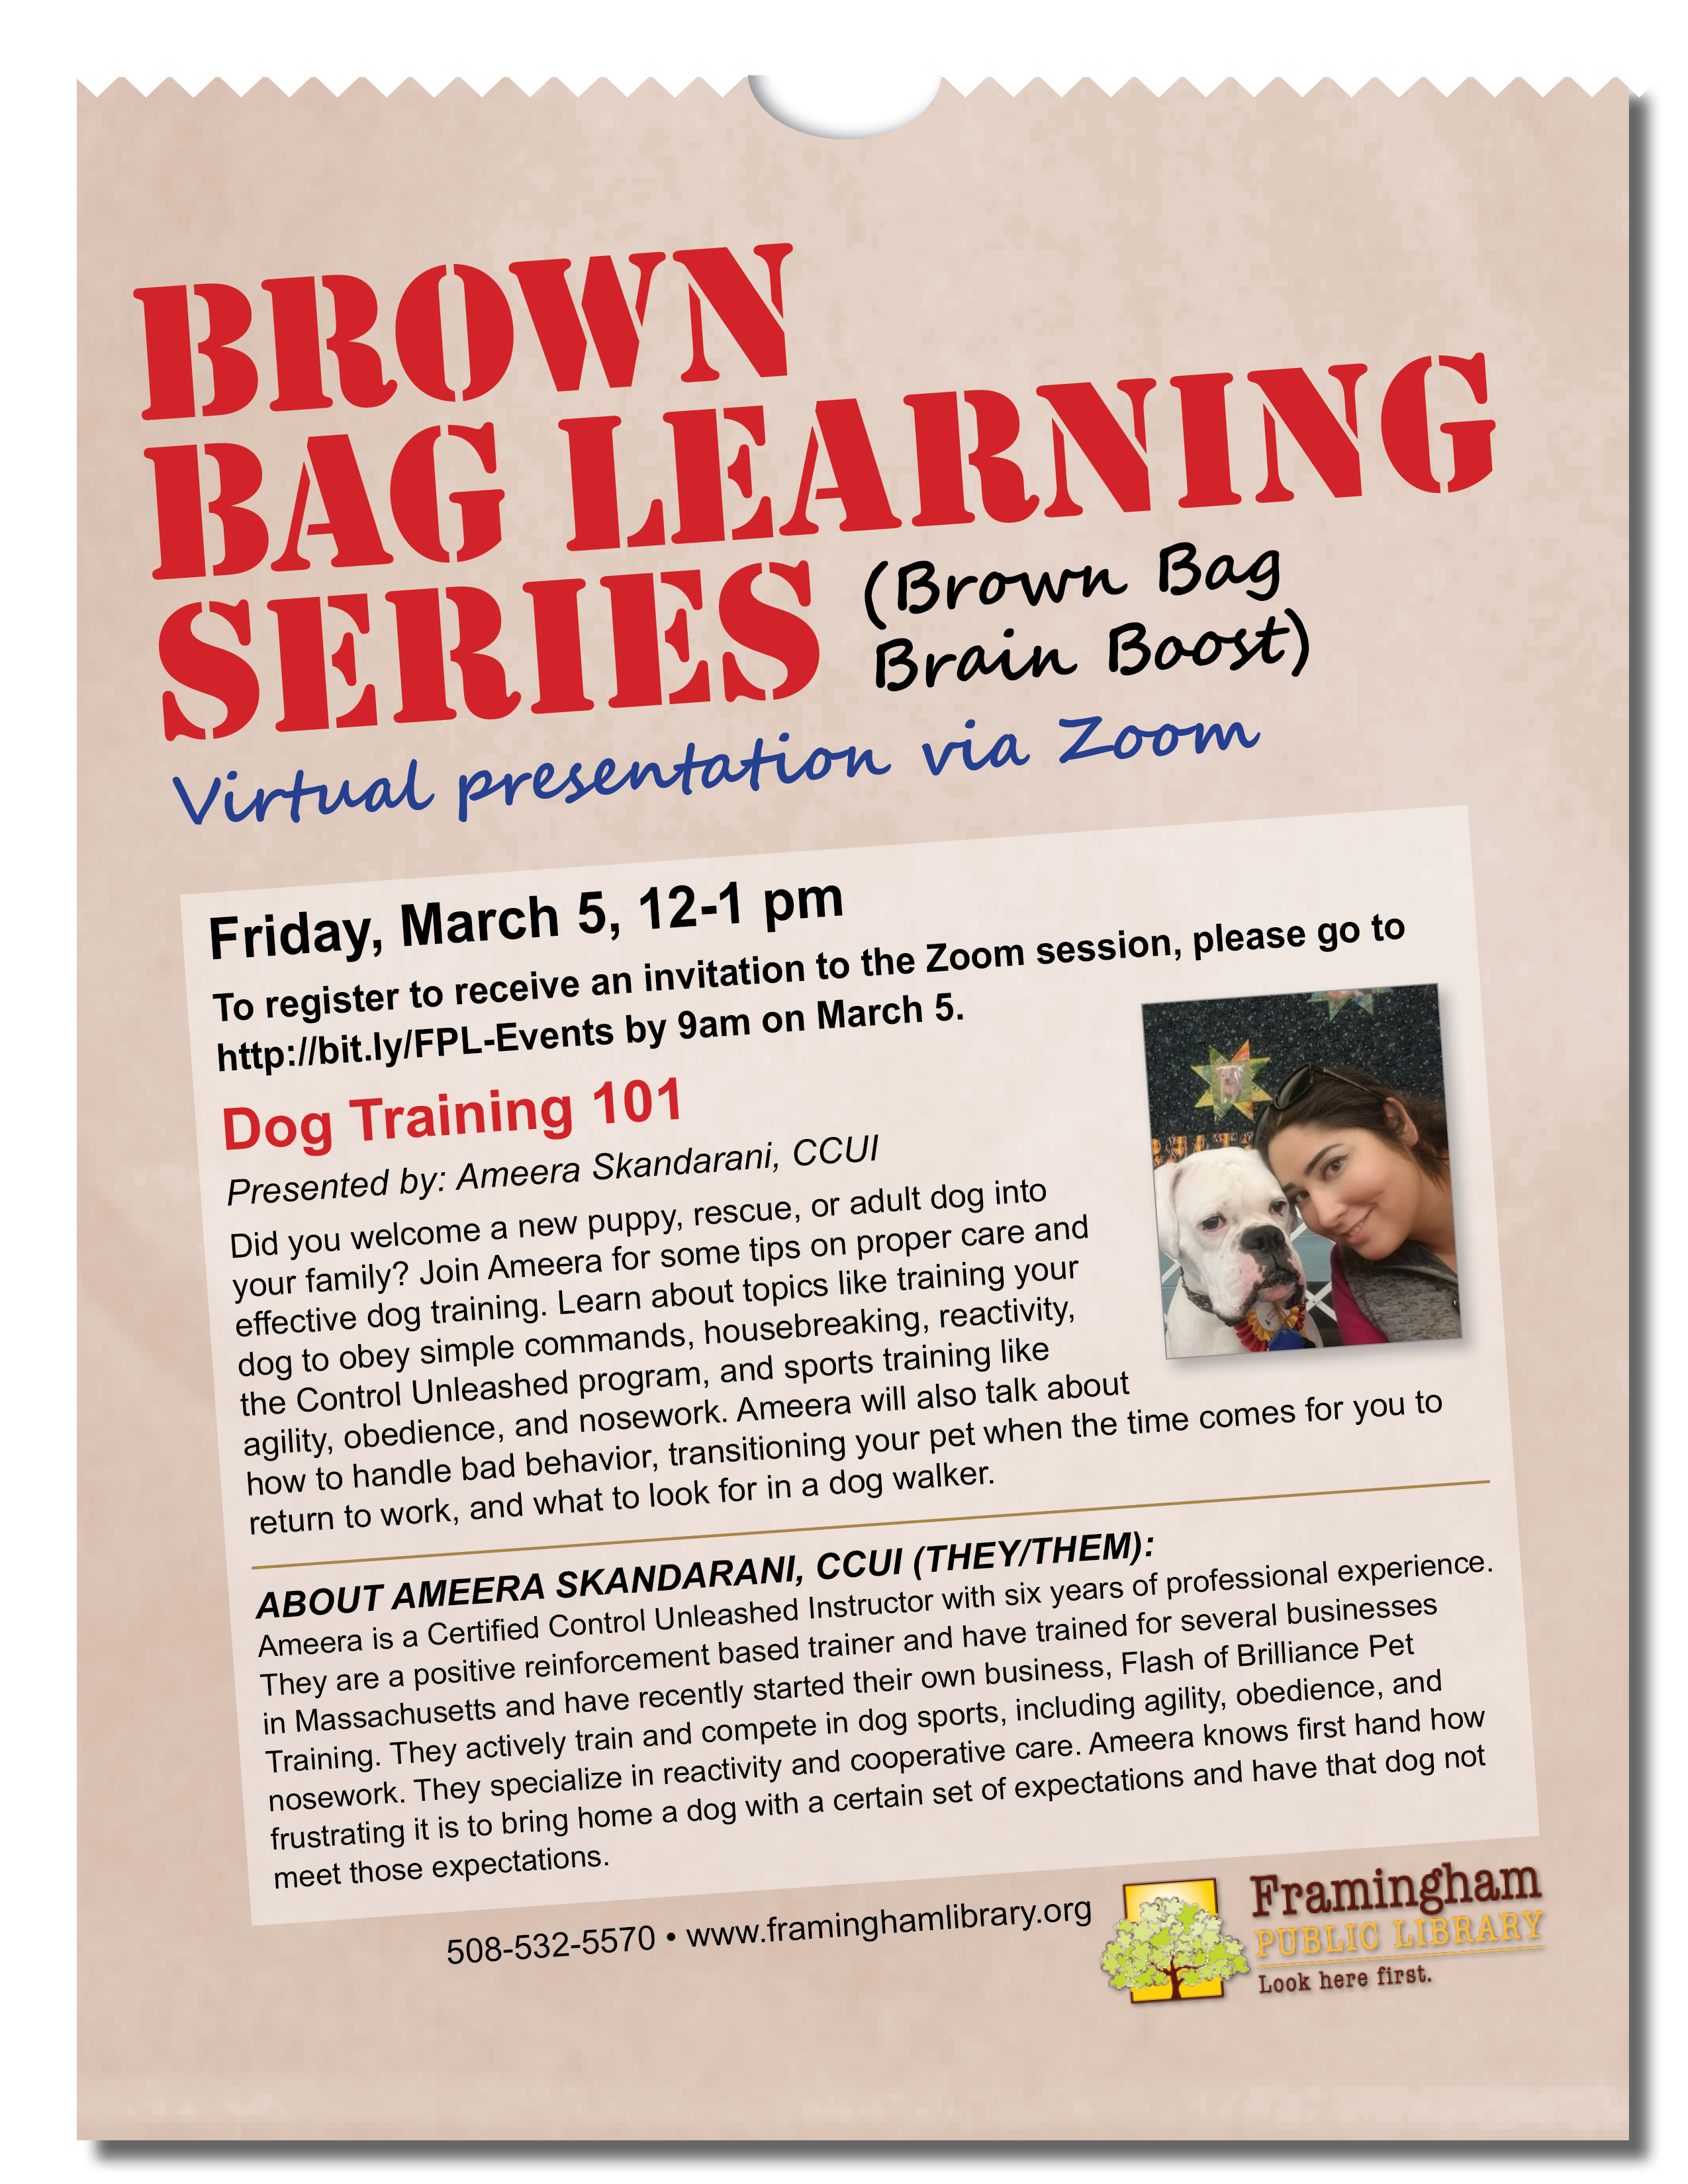 Brown Bag Learning Series: Dog Training 101 thumbnail Photo